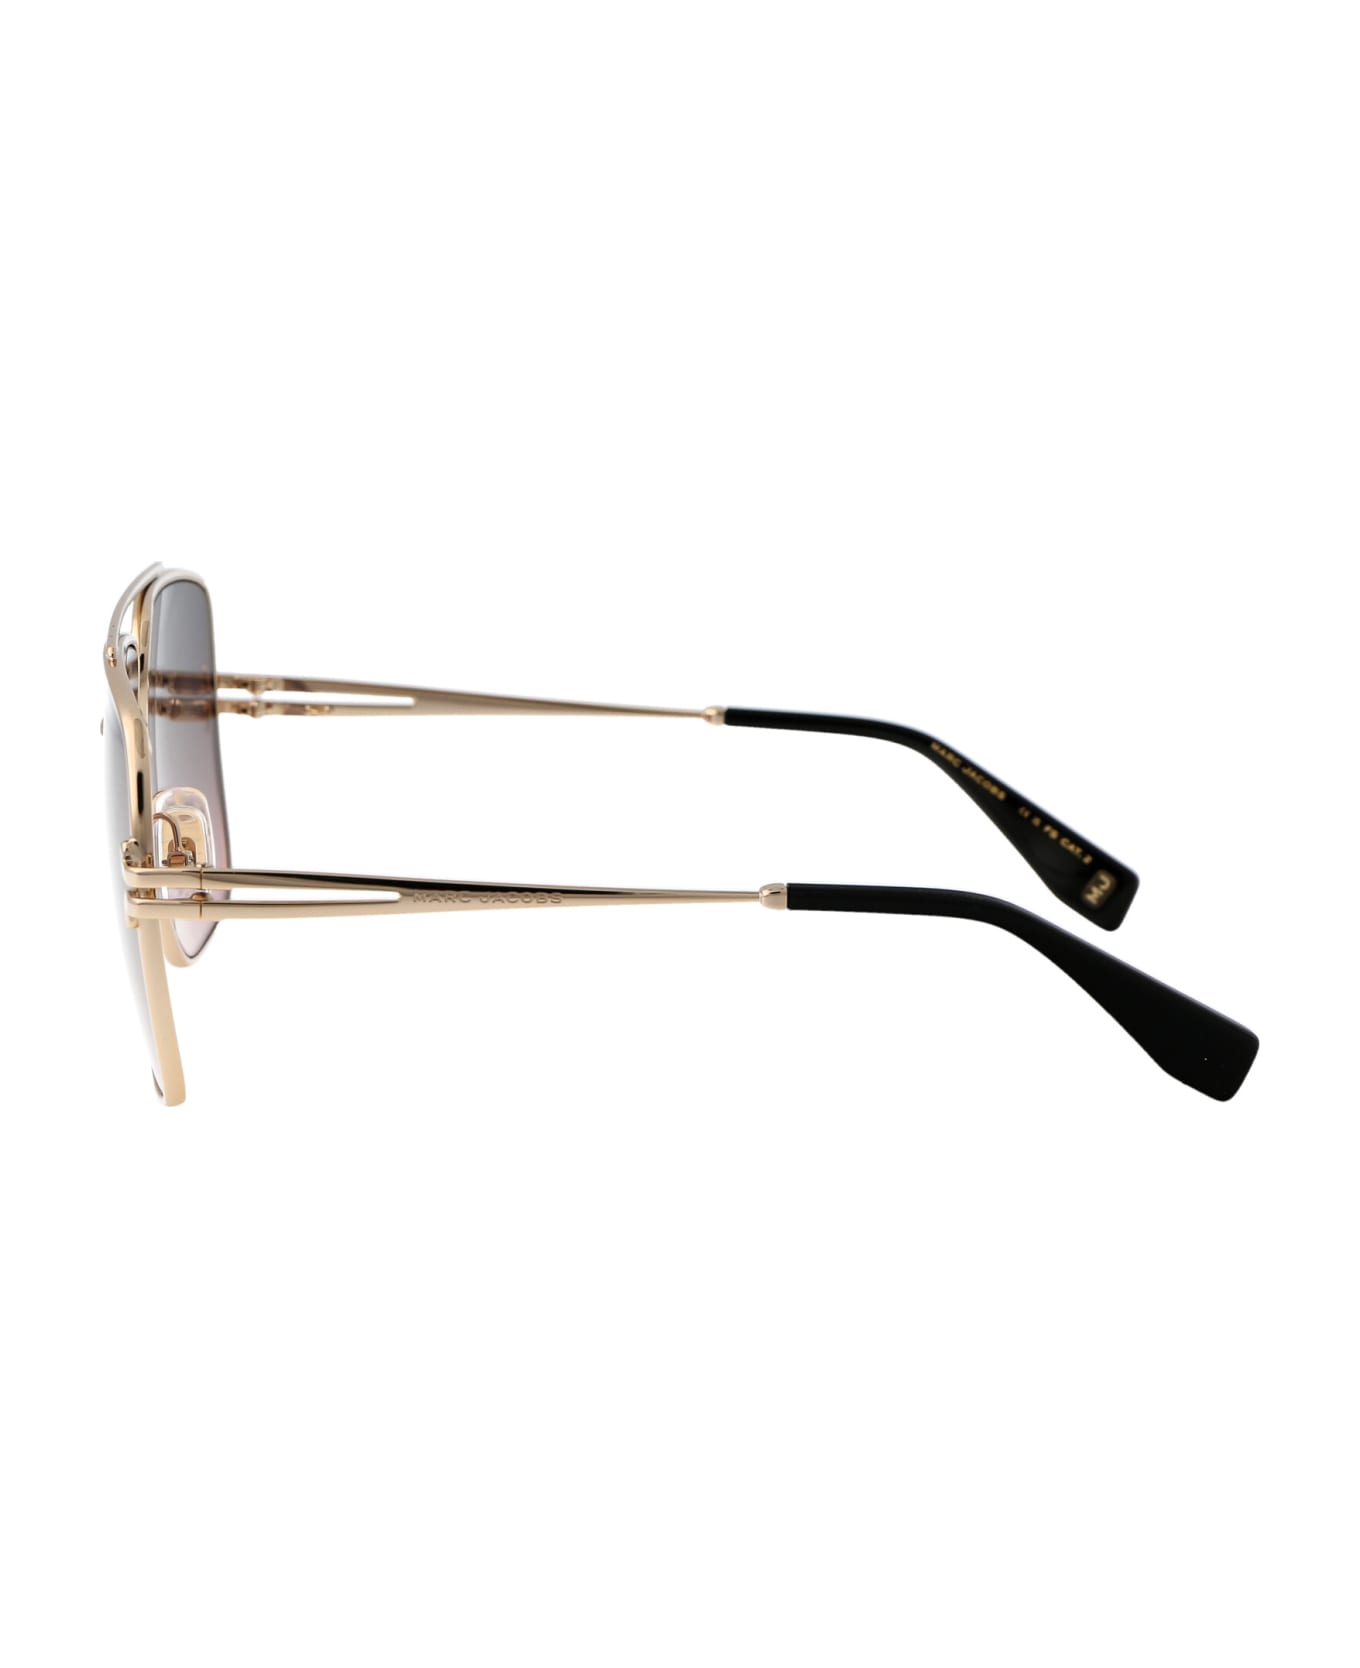 Marc Jacobs Eyewear Mj 1091/n/s Sunglasses - arbita sunglasses moscot glasses arbita sun black